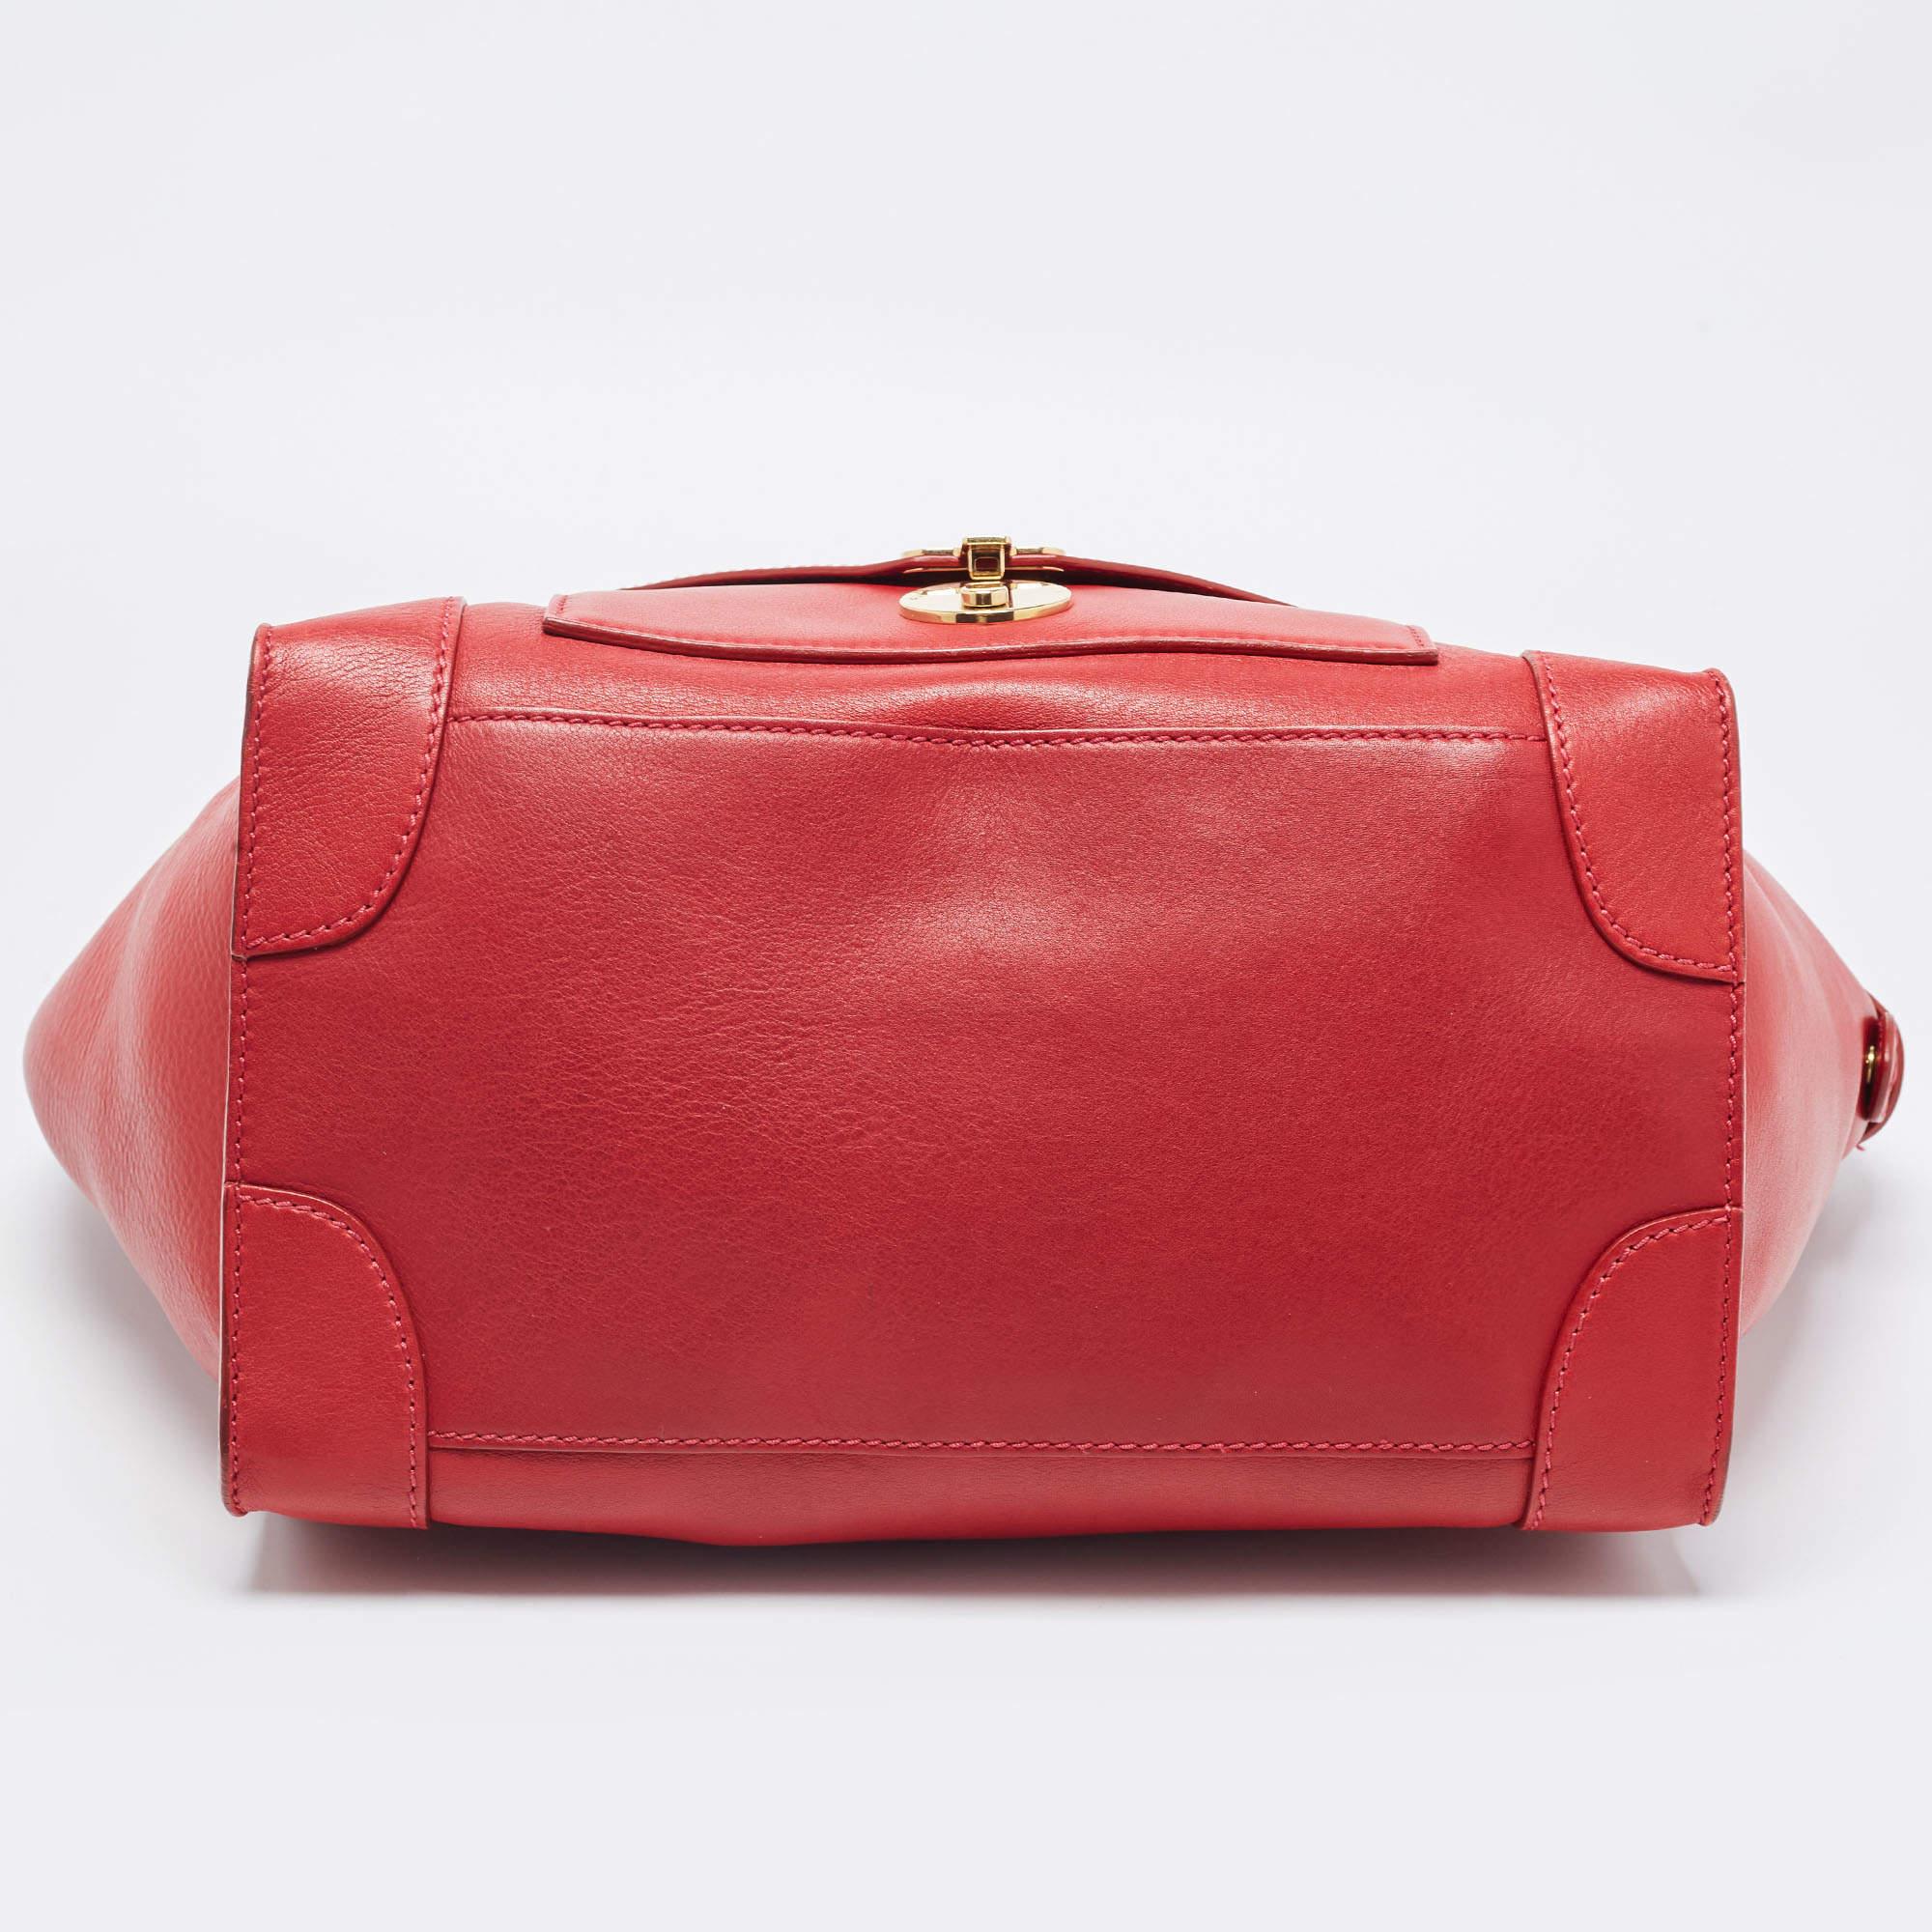 Celine Red Leather Mini Envelope Luggage Tote 1